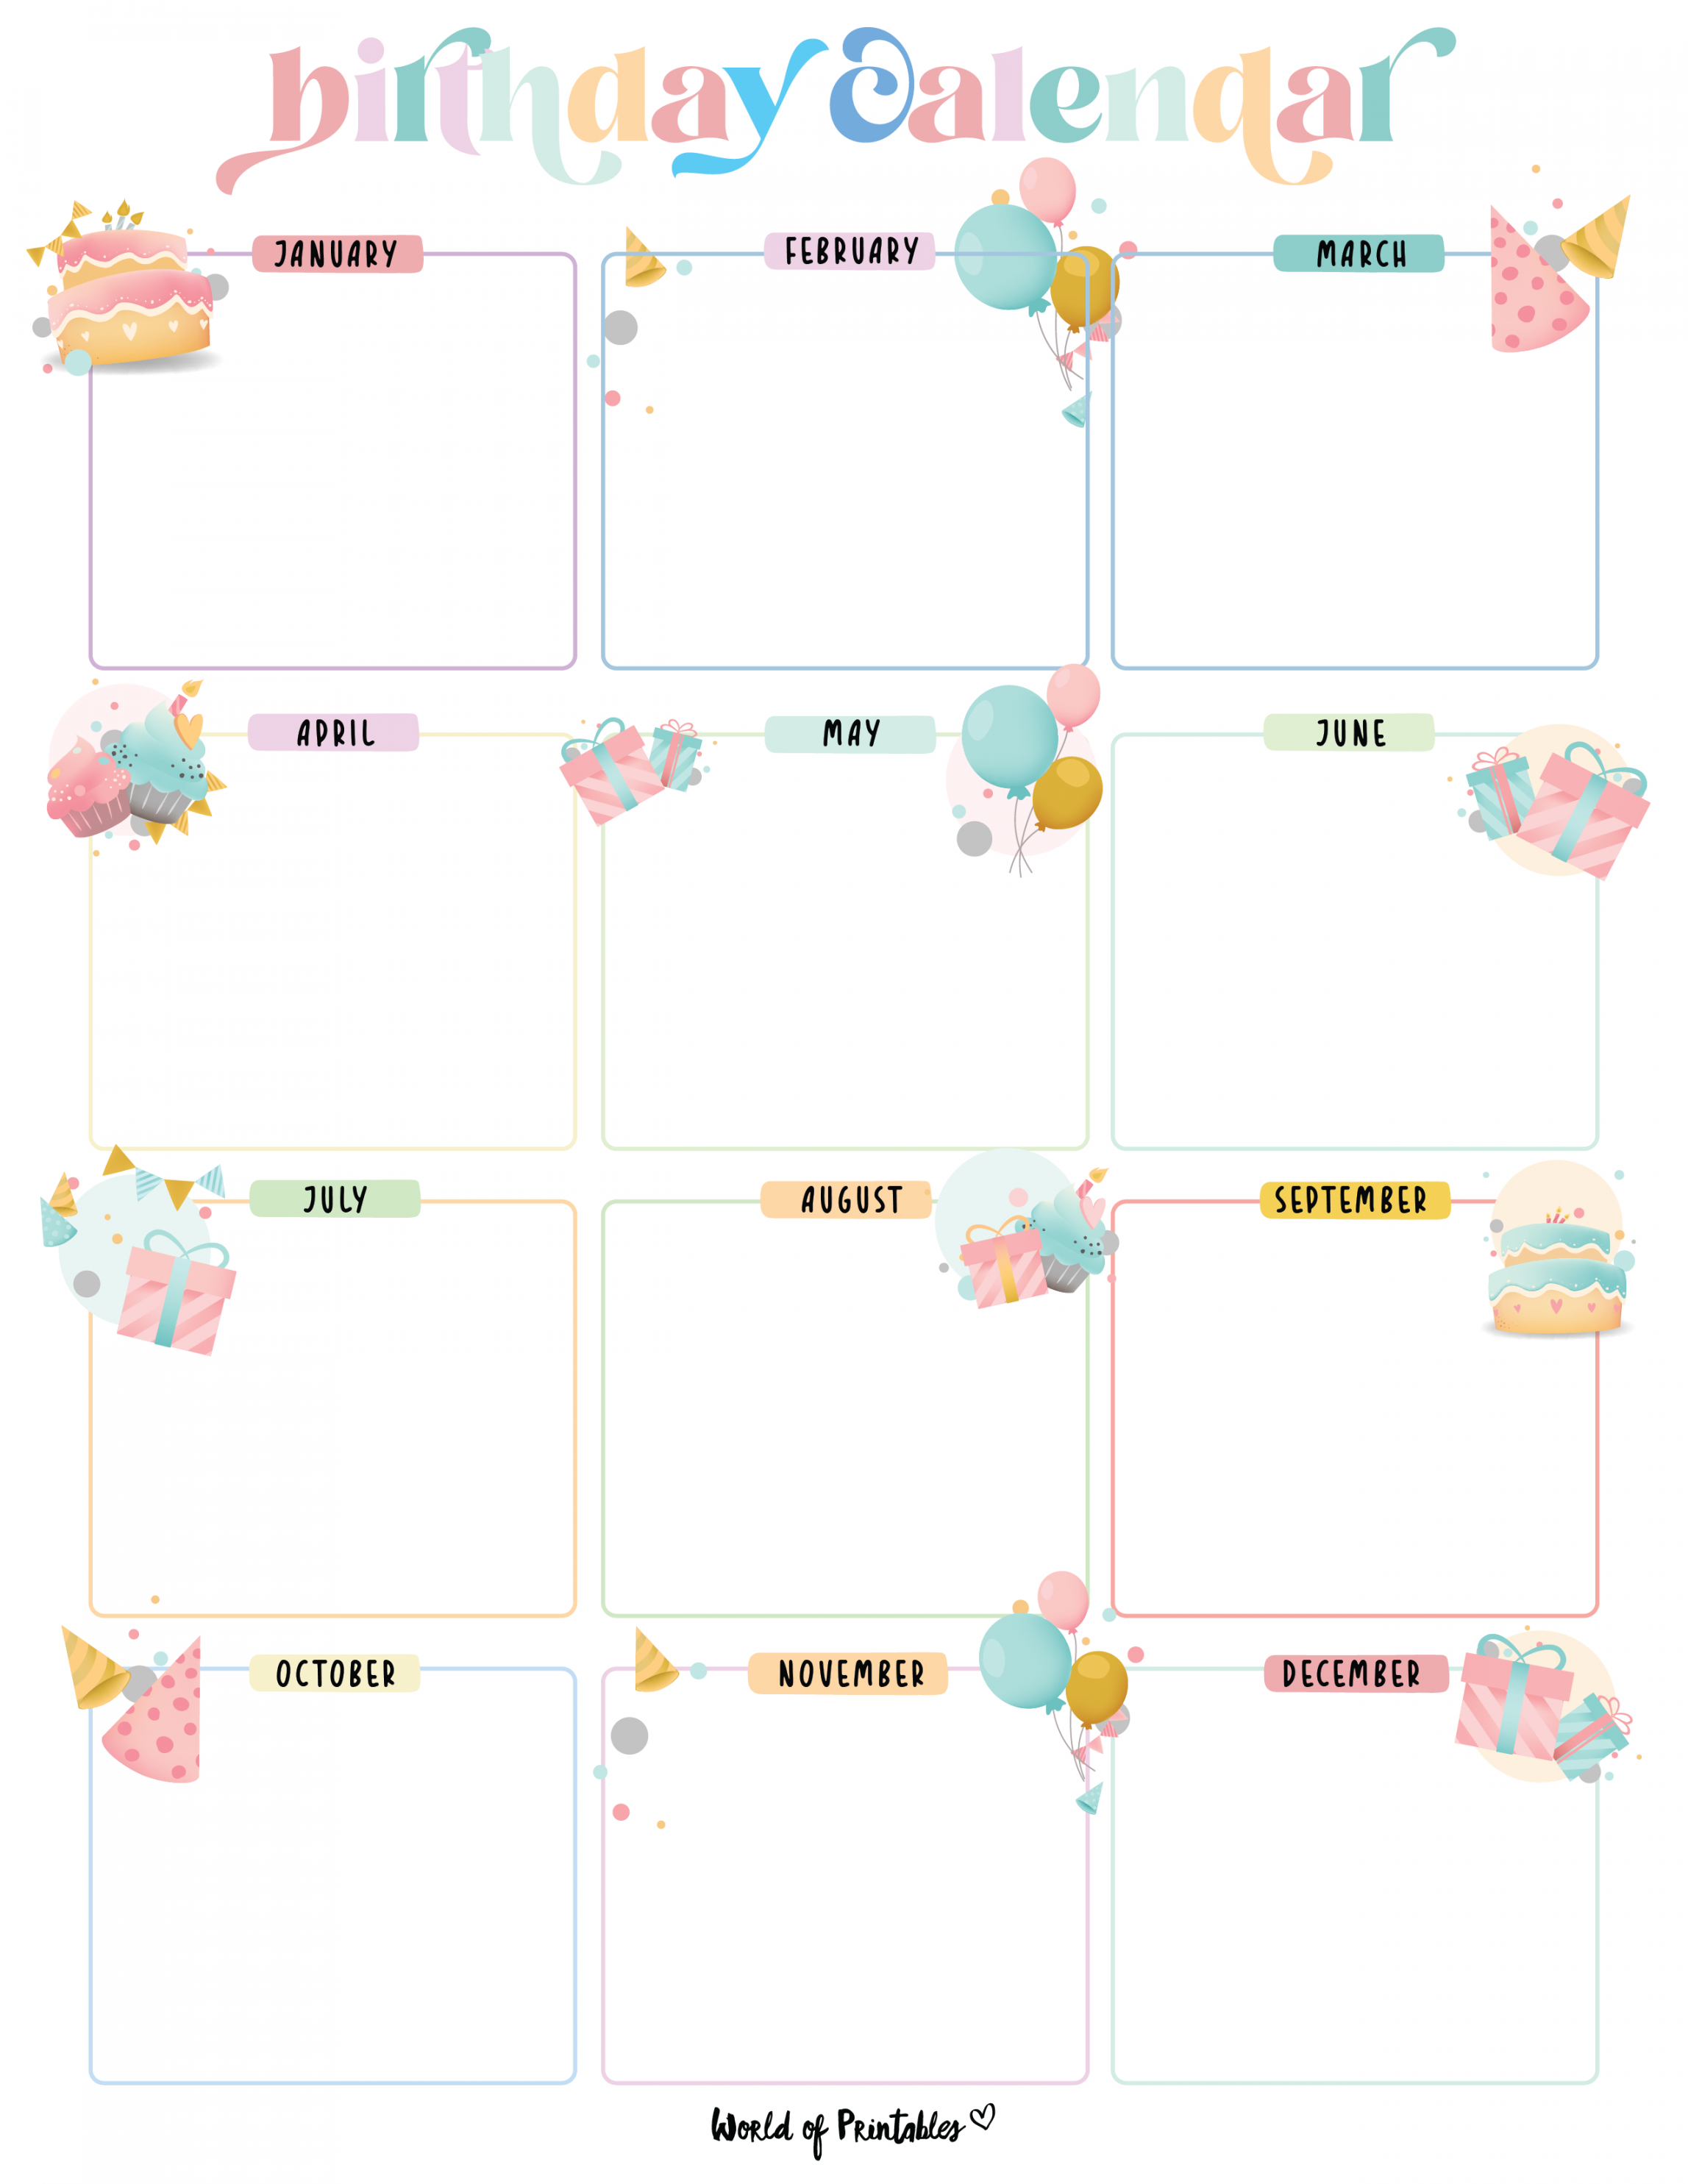 Birthday Calendars - World of Printables - FREE Printables - Free Printable Birthday Calendar